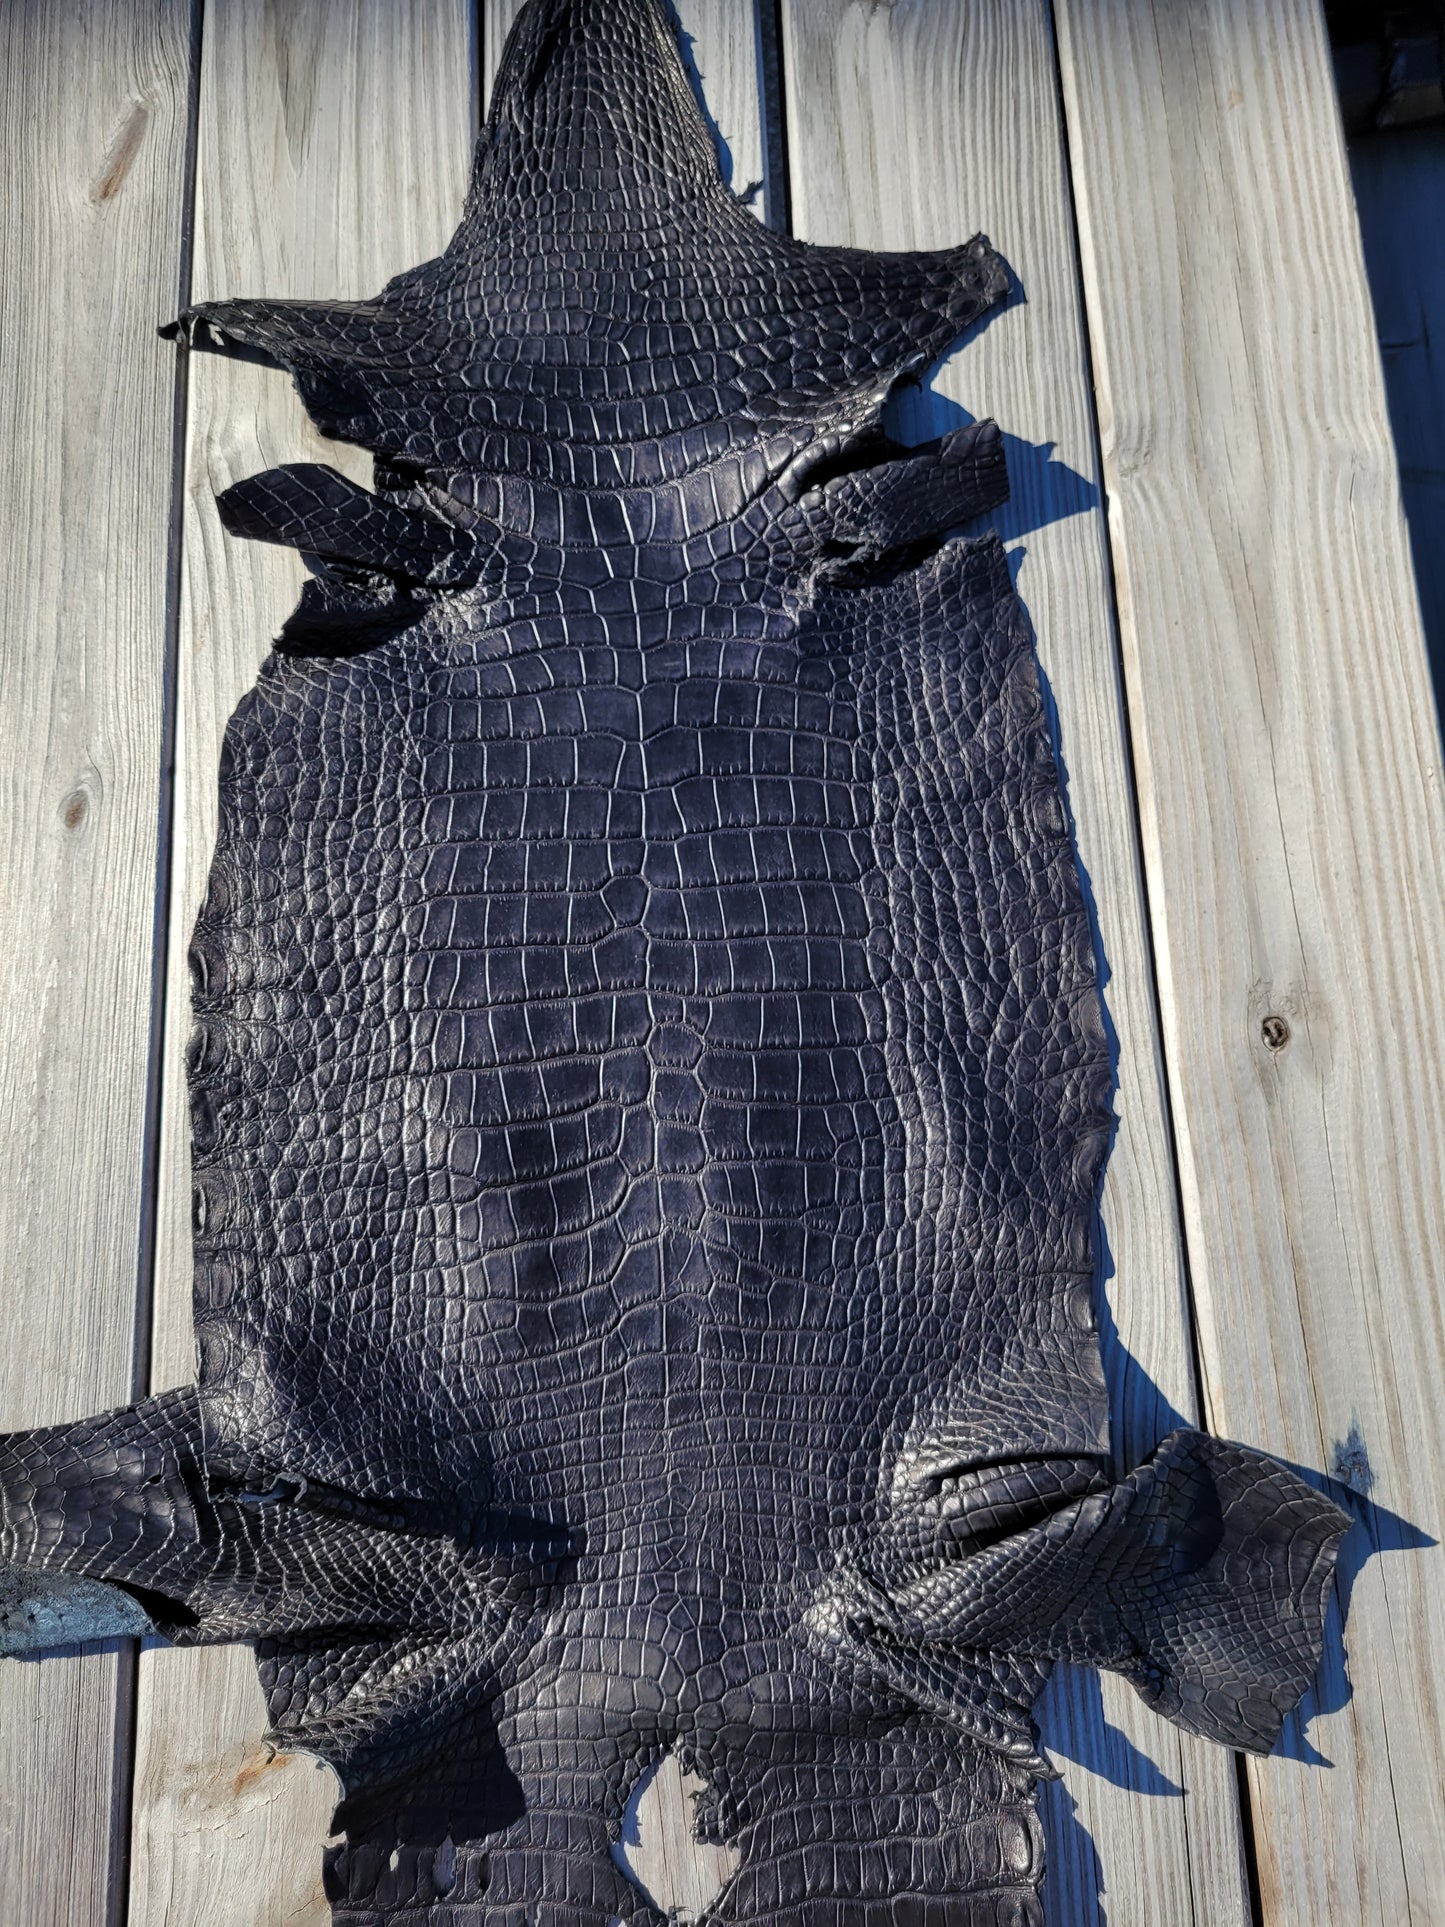 Alligator Skin - 36cm- Grade 2/3 Black (Matte)